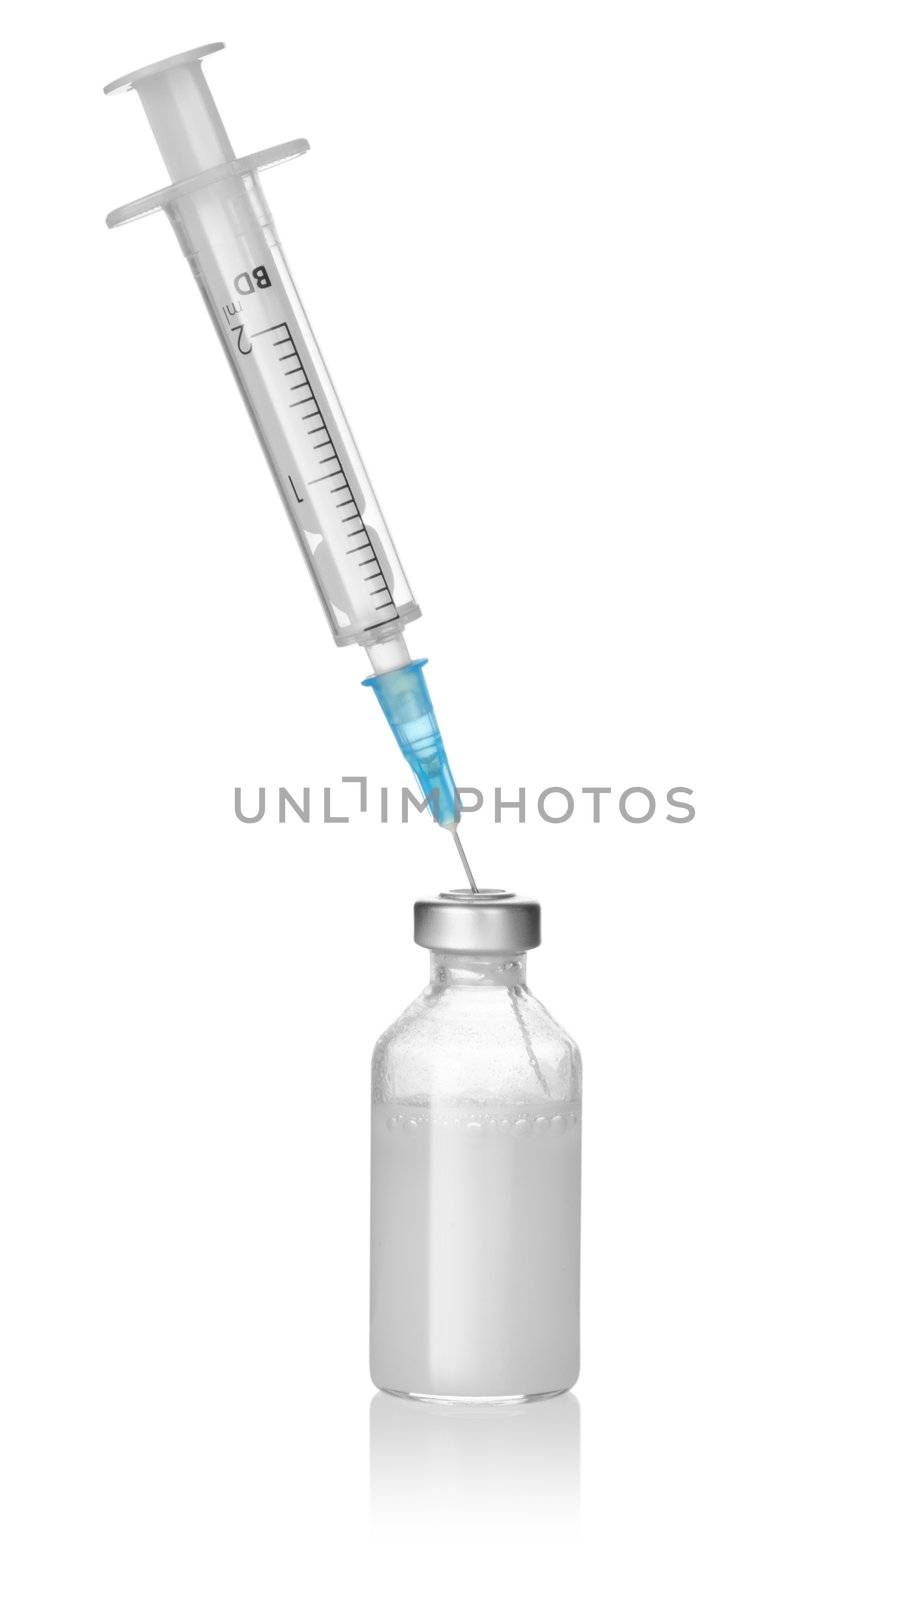 Insulin and syringe isolated on white background Path